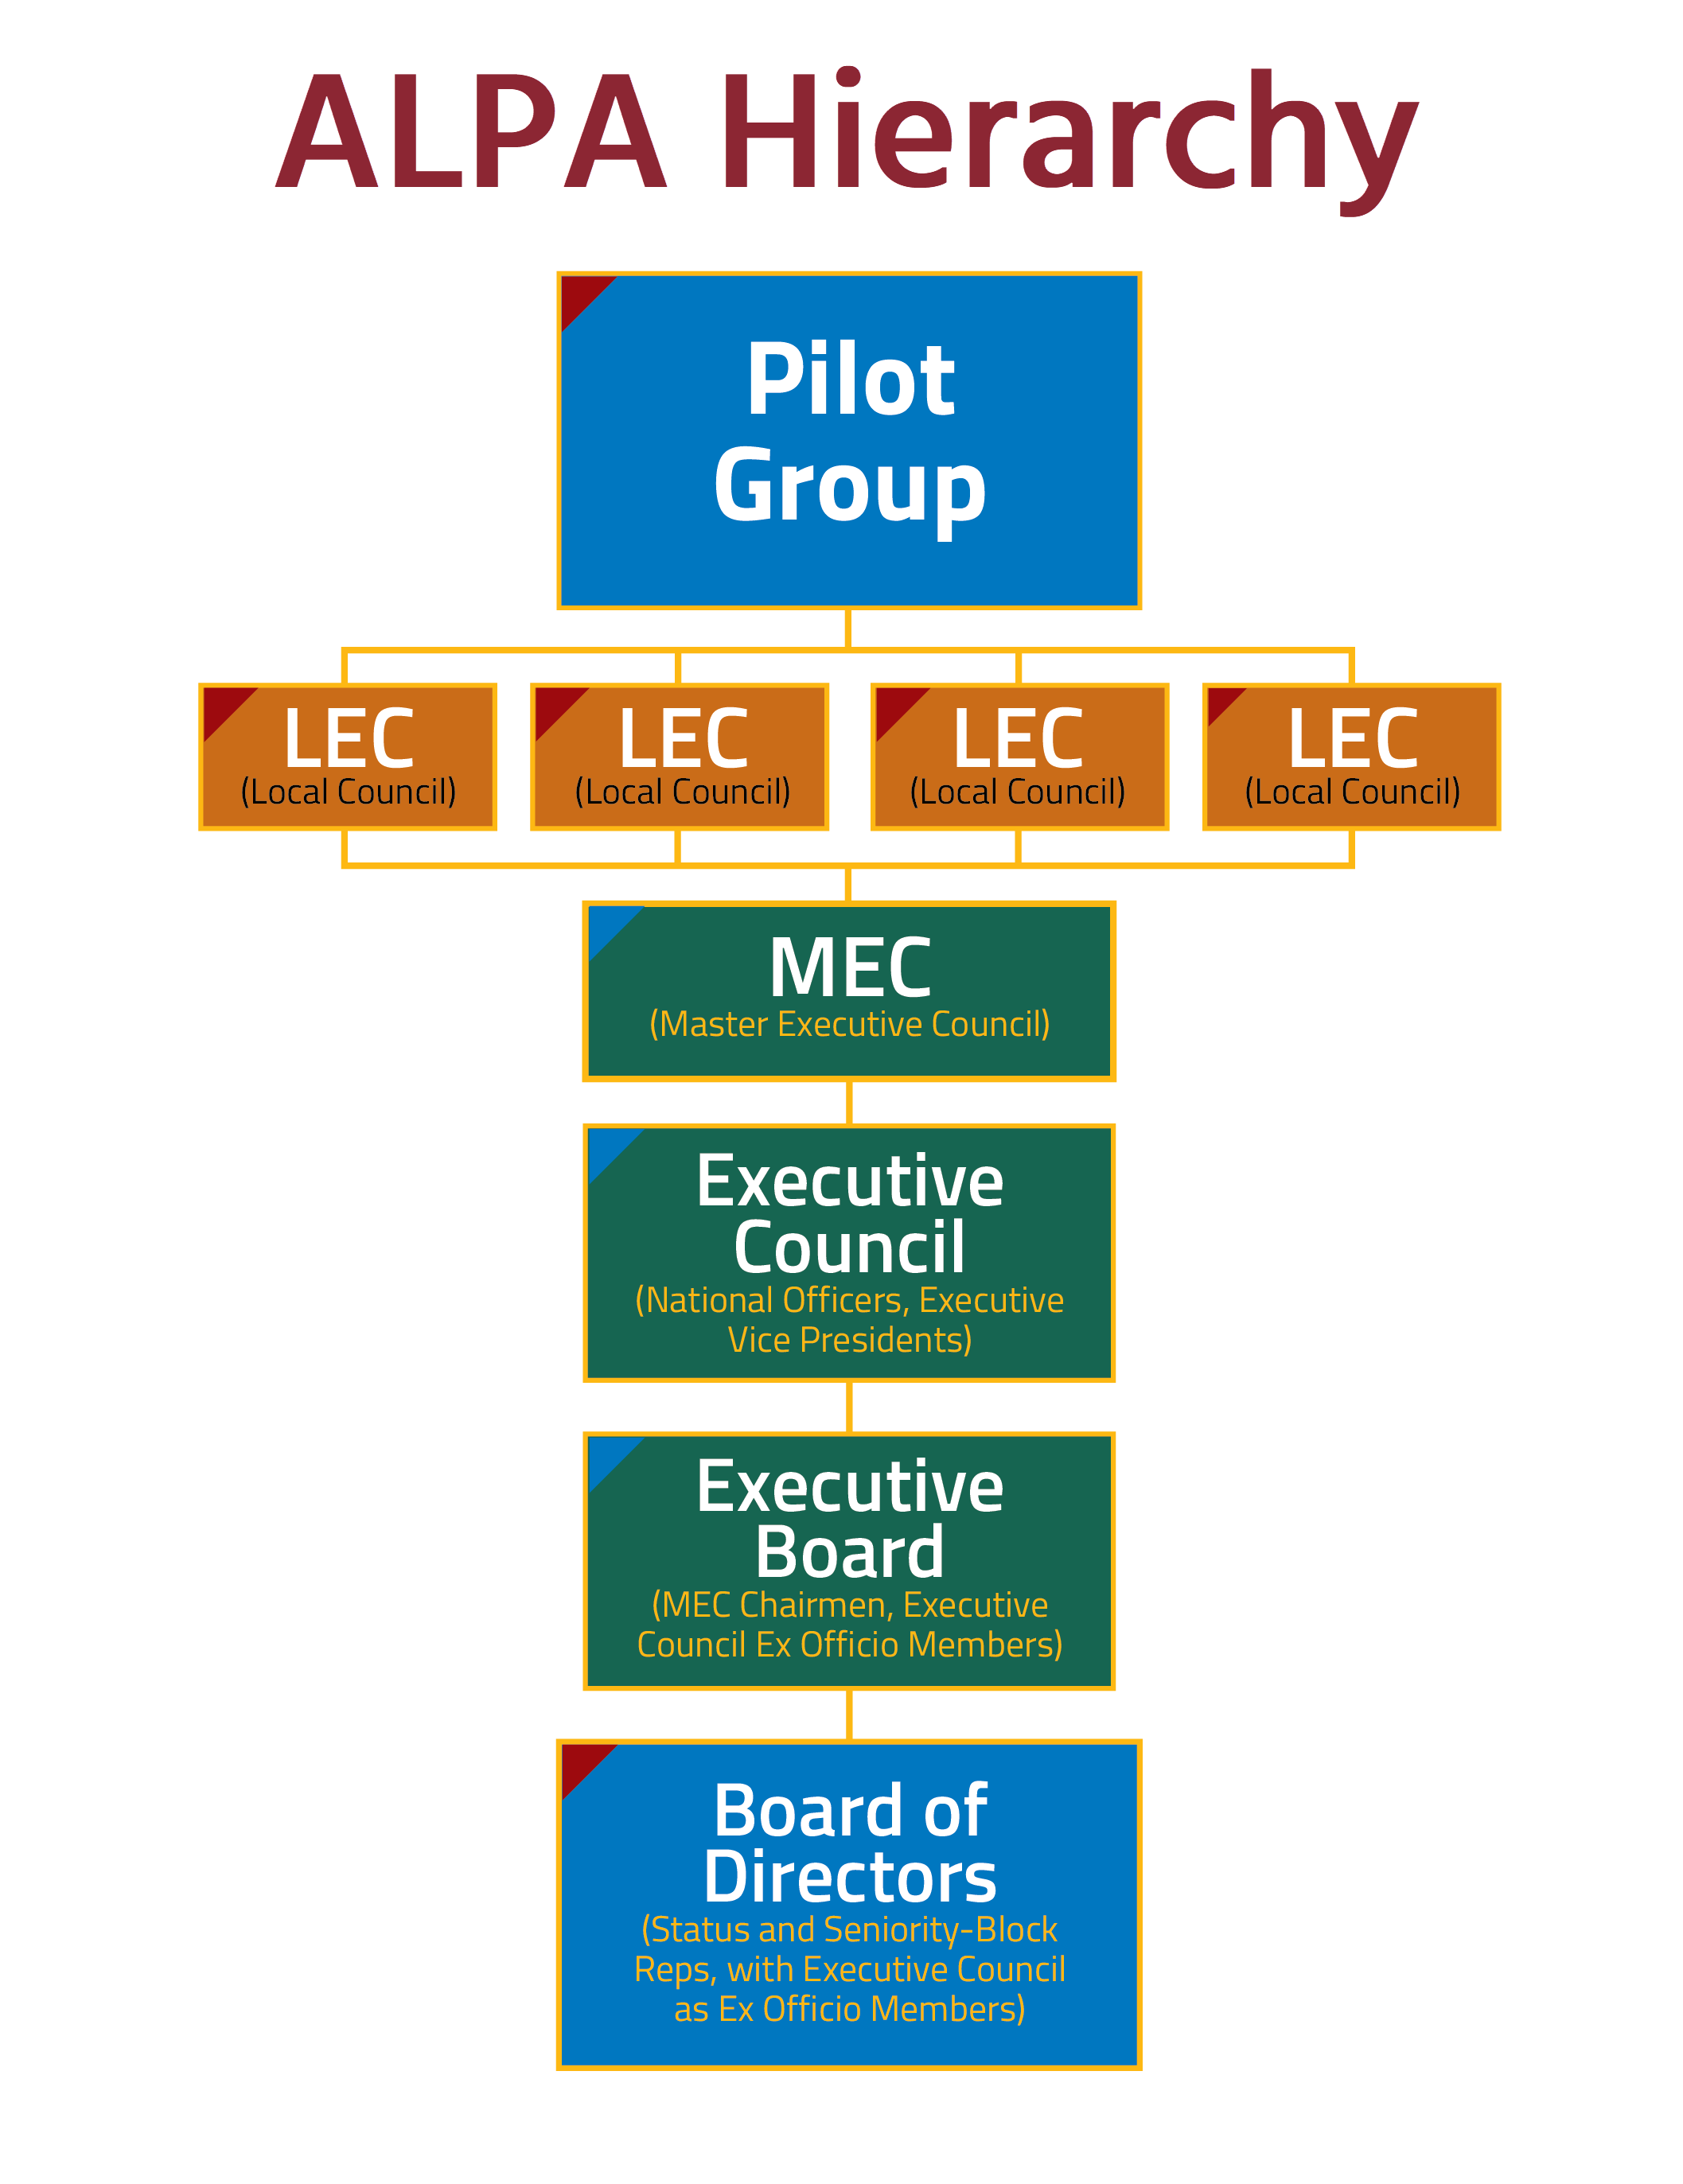 ALPA Hierarchy Organizational Chart